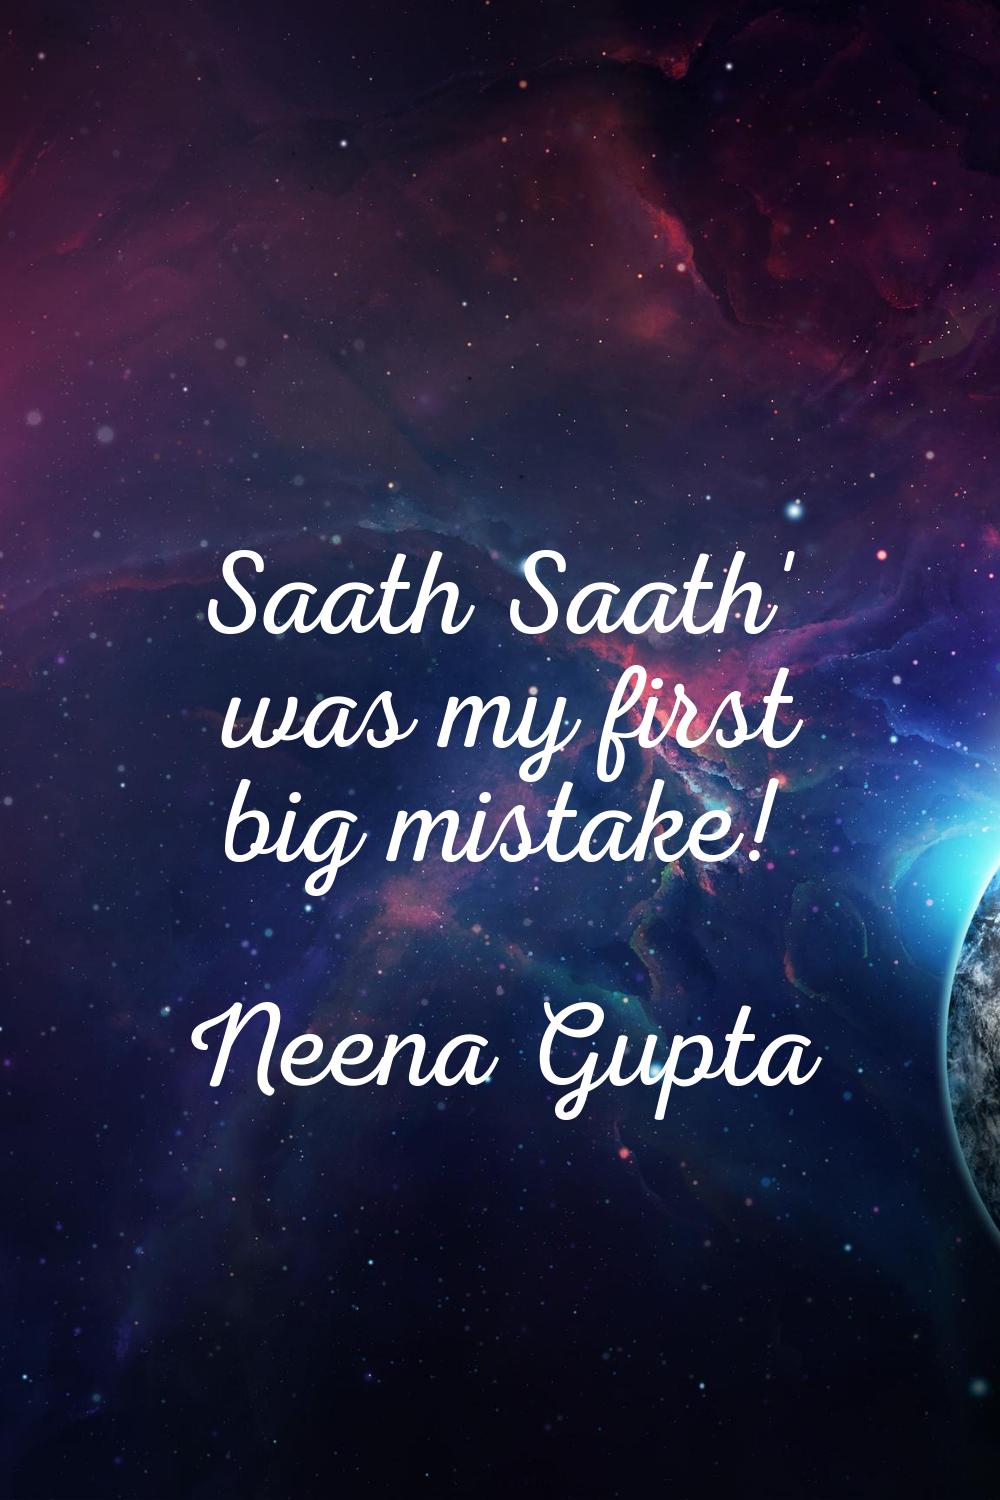 Saath Saath' was my first big mistake!